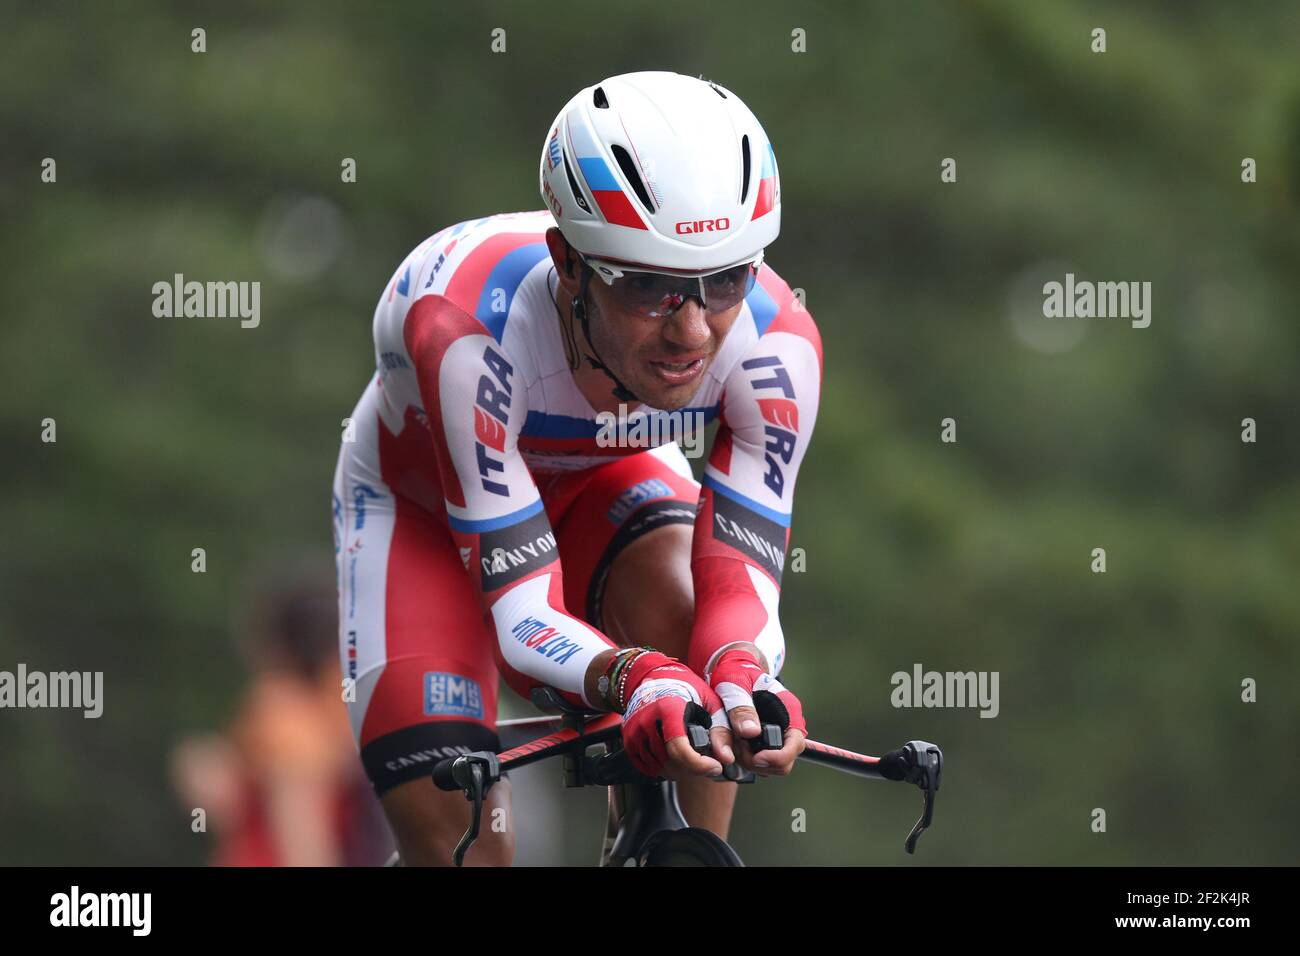 Ciclismo - UCI World Tour - Tour de France 2013 - fase 17 - prova a tempo individuale - Embrun - Chorges (32 km) - 17/07/2013 - Foto MANUEL BLONDAU / DPPI - Joaquim Rodriguez della Spagna e del Team Katusha Foto Stock